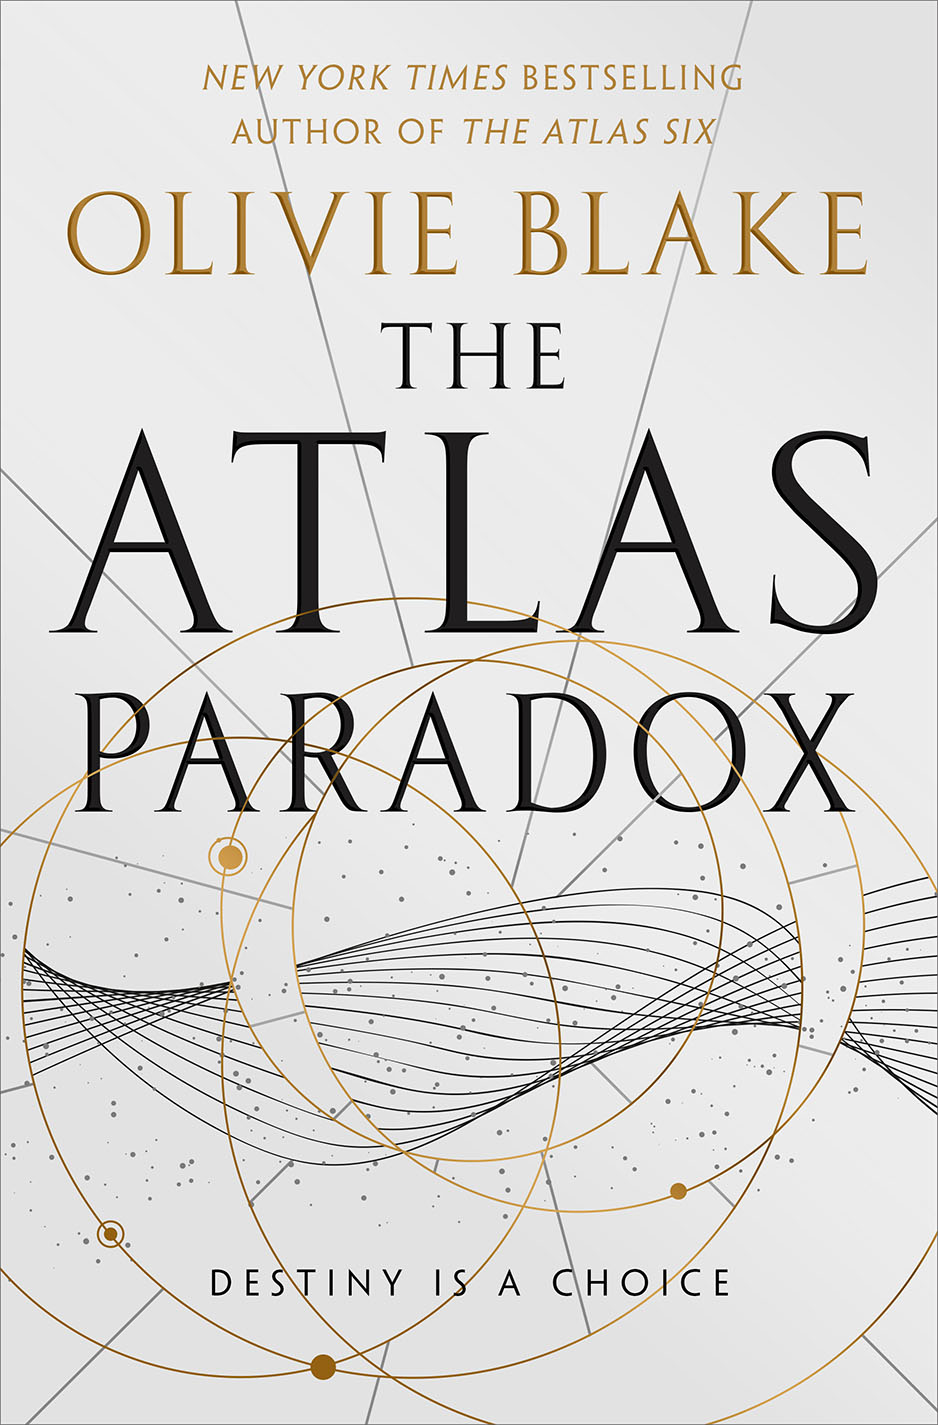 The Atlas Paradox by Olivie Blake book cover